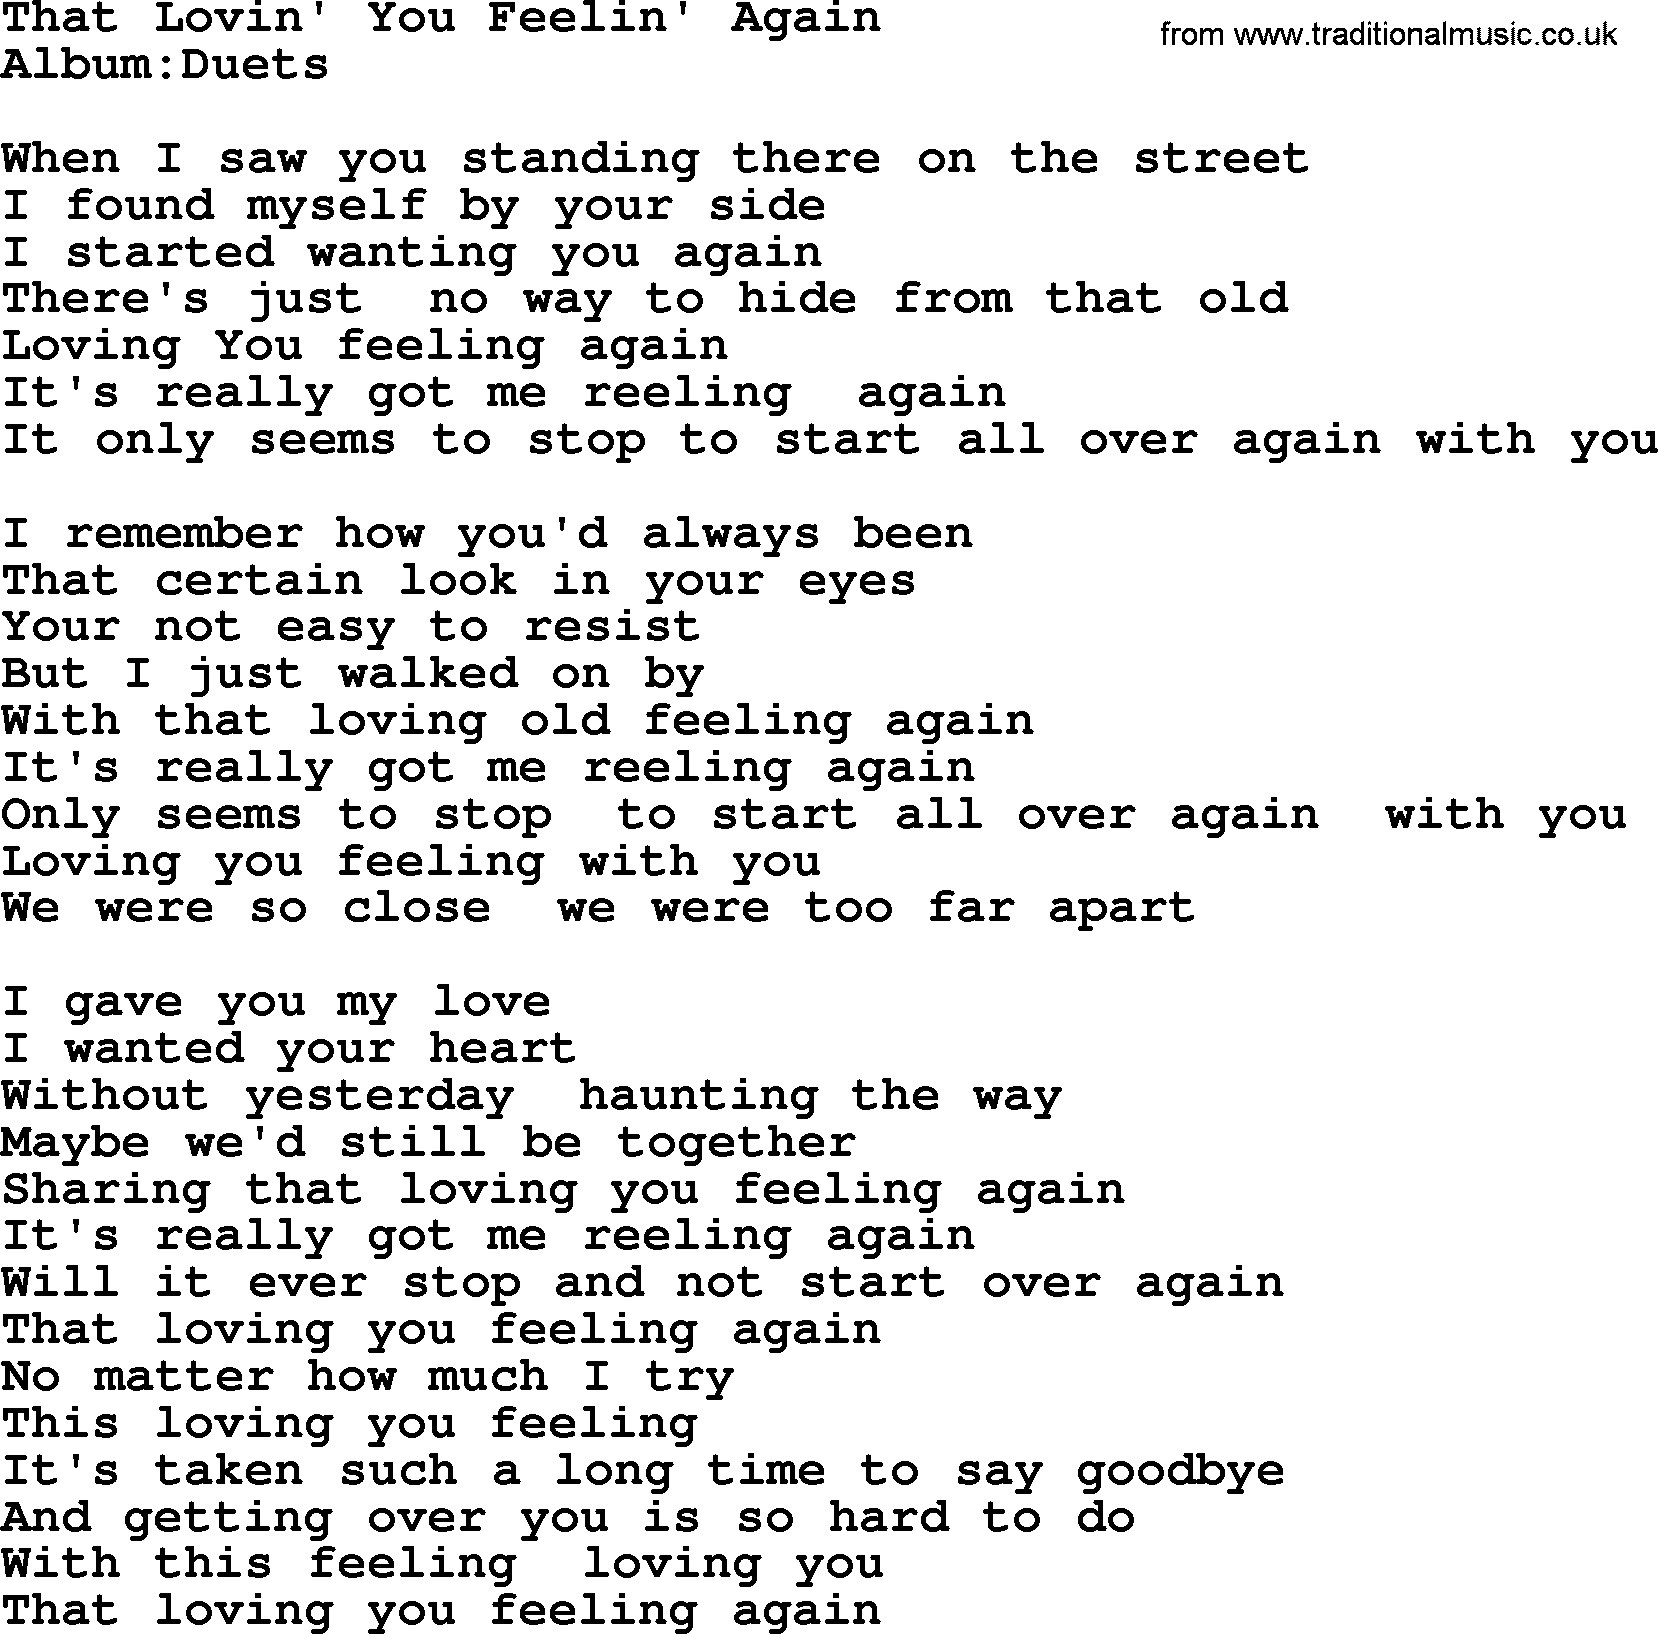 Emmylou Harris song: That Lovin' You Feelin' Again lyrics